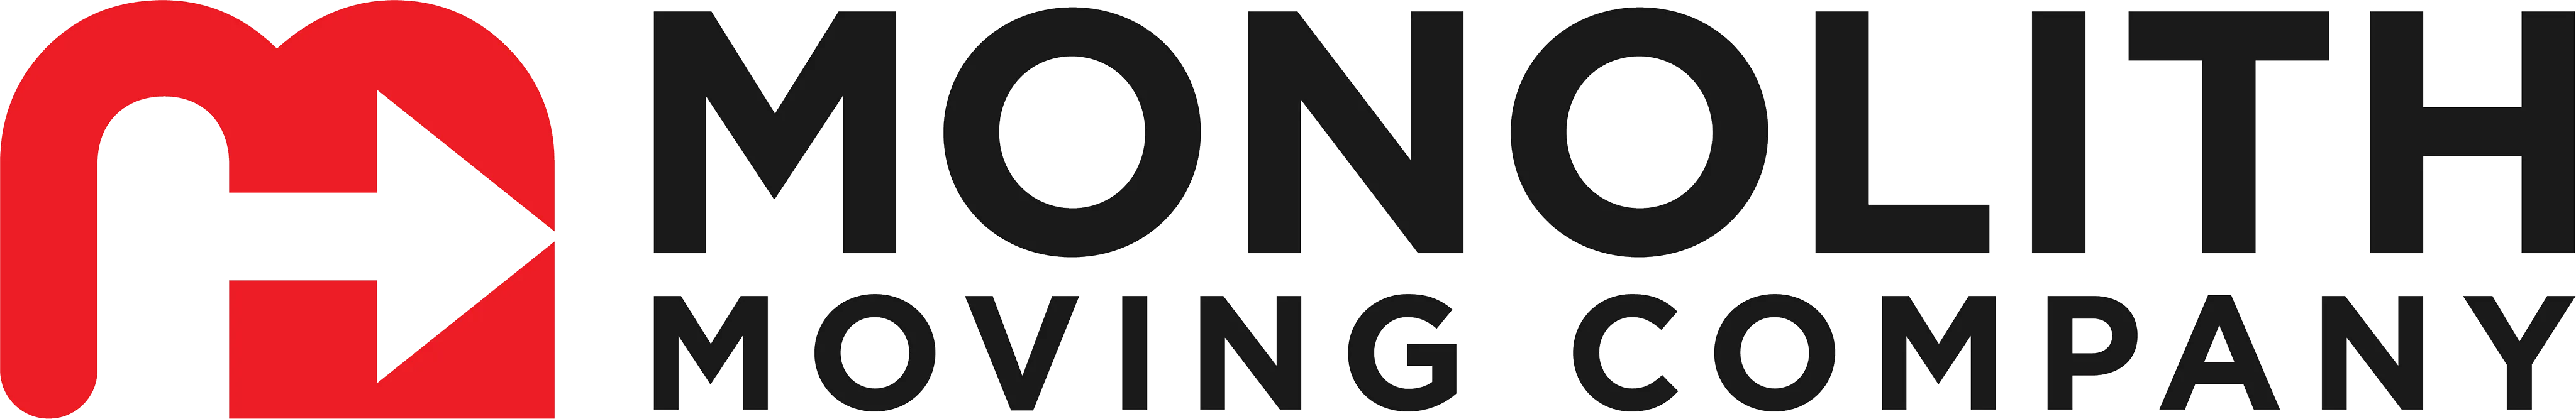 Monolith Moving Company, LLC logo